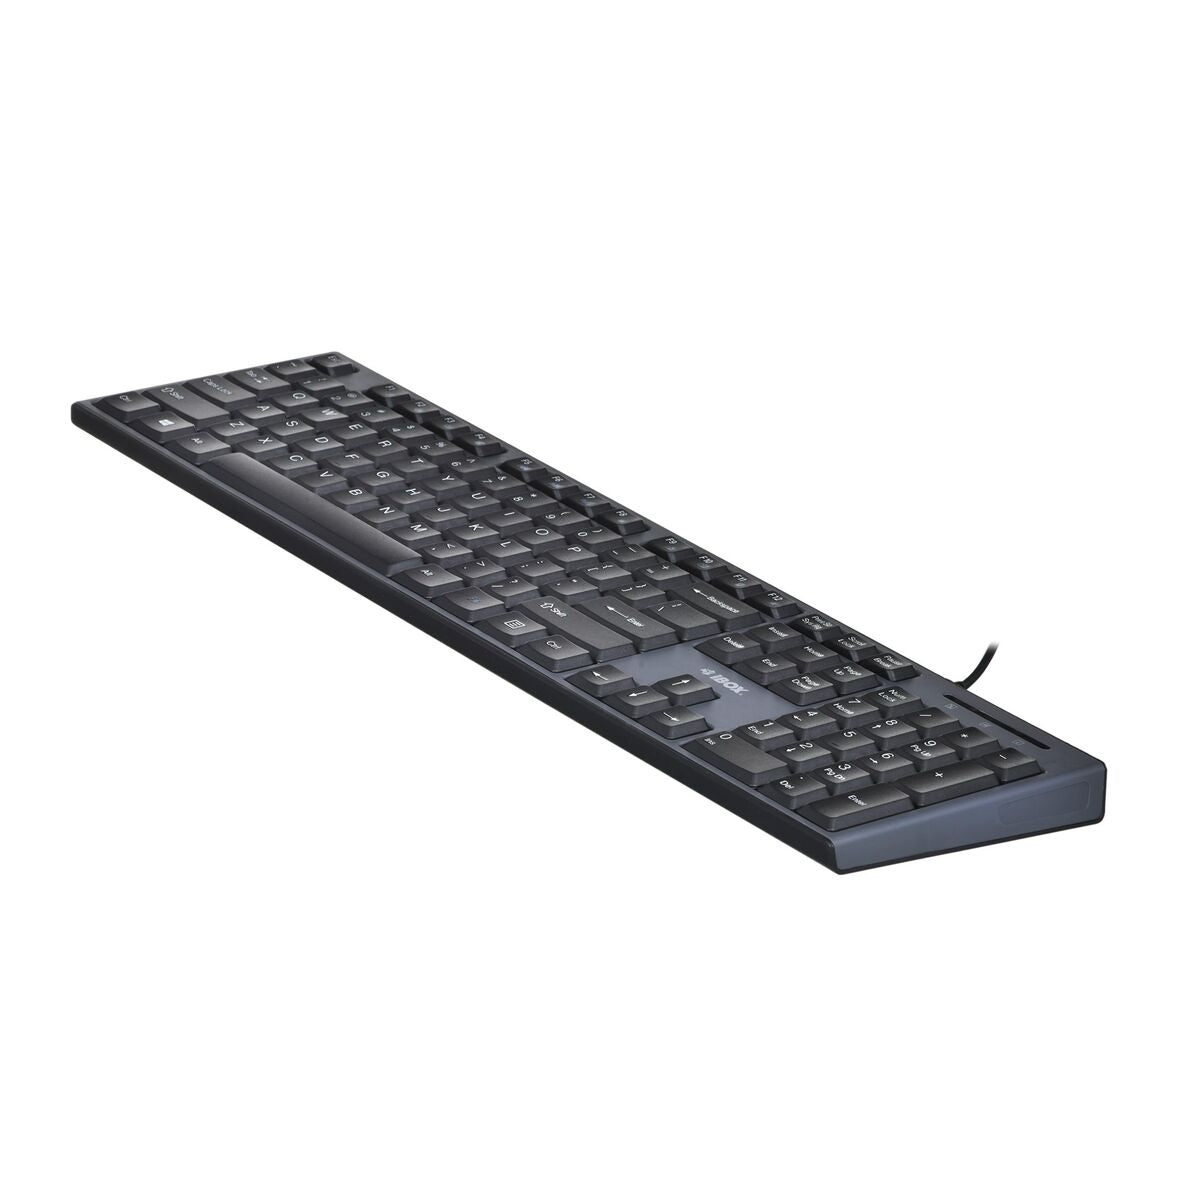 Tastatur mit Maus Ibox IKMS606 Qwerty US Schwarz QWERTY - CA International 